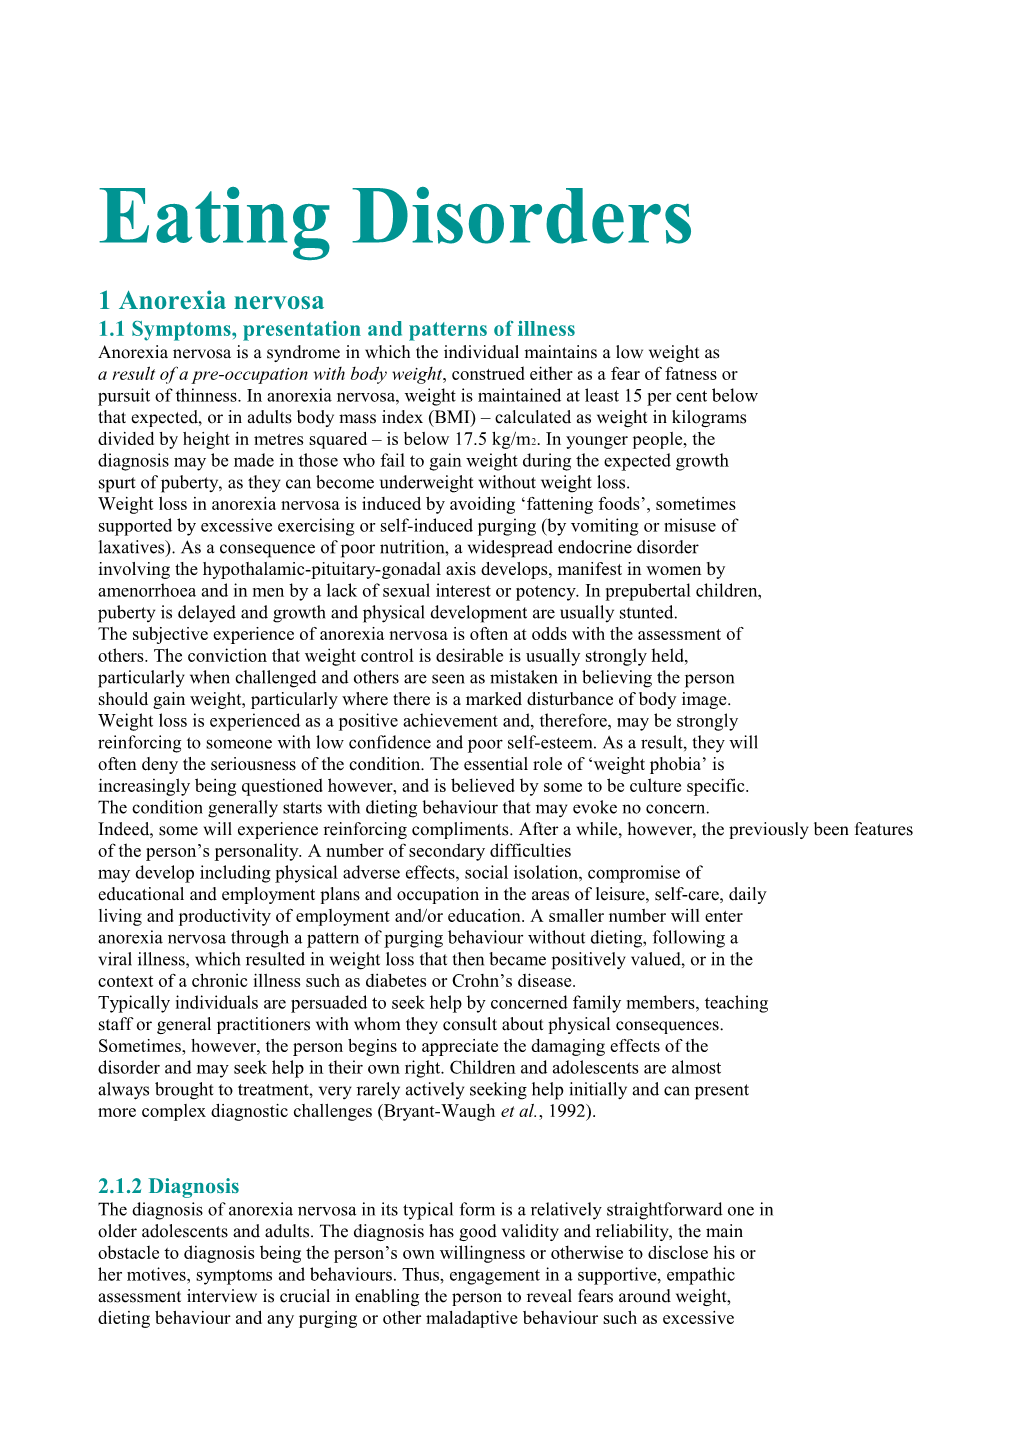 1.1 Symptoms, Presentation and Patterns of Illness